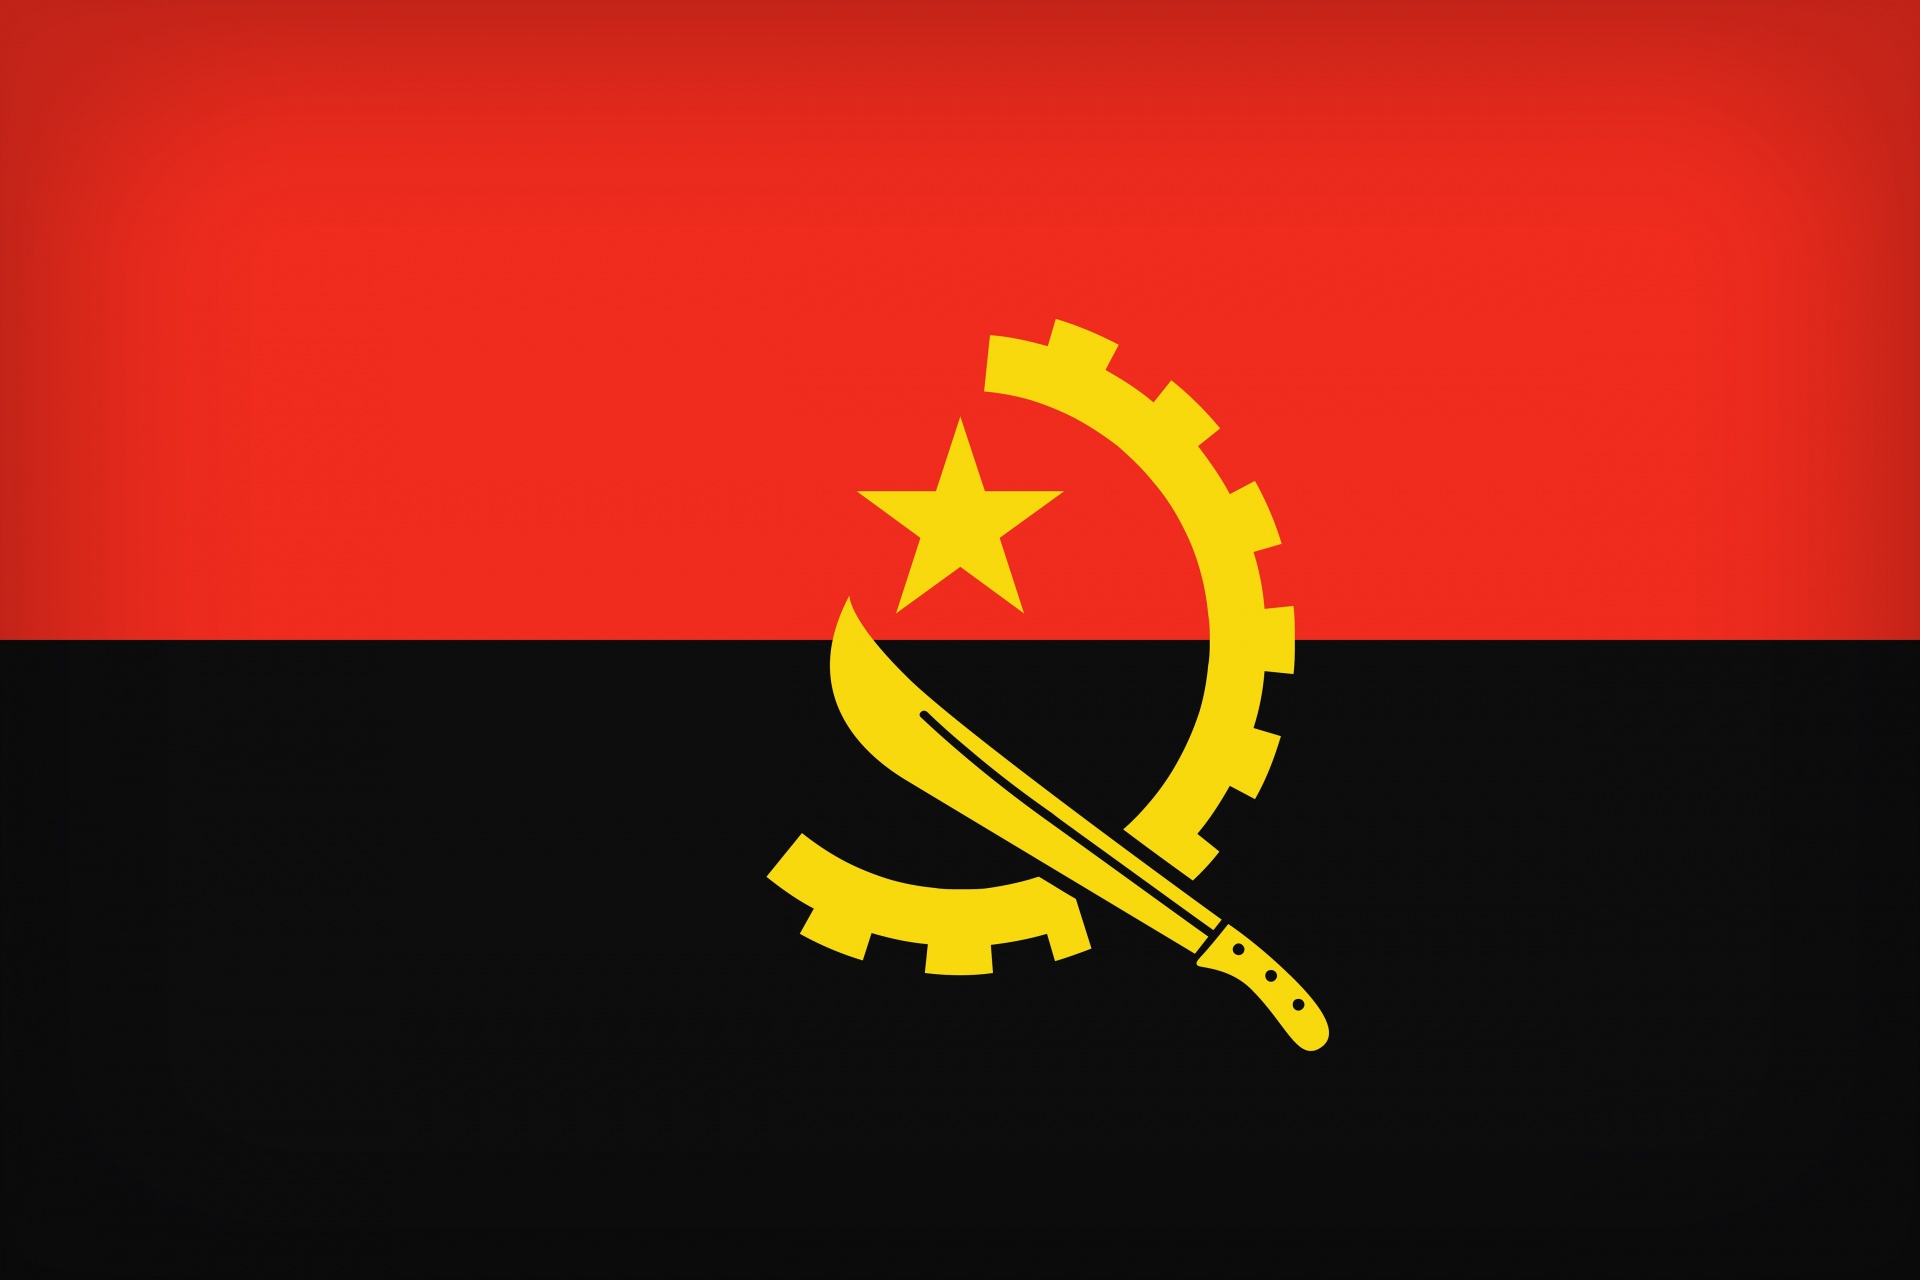 Con,  Pasaulis,  Reklama,  Emblema,  Spalva,  Patriotizmas,  Tautybė,  Patriotas,  Vėliava & Nbsp,  Angola